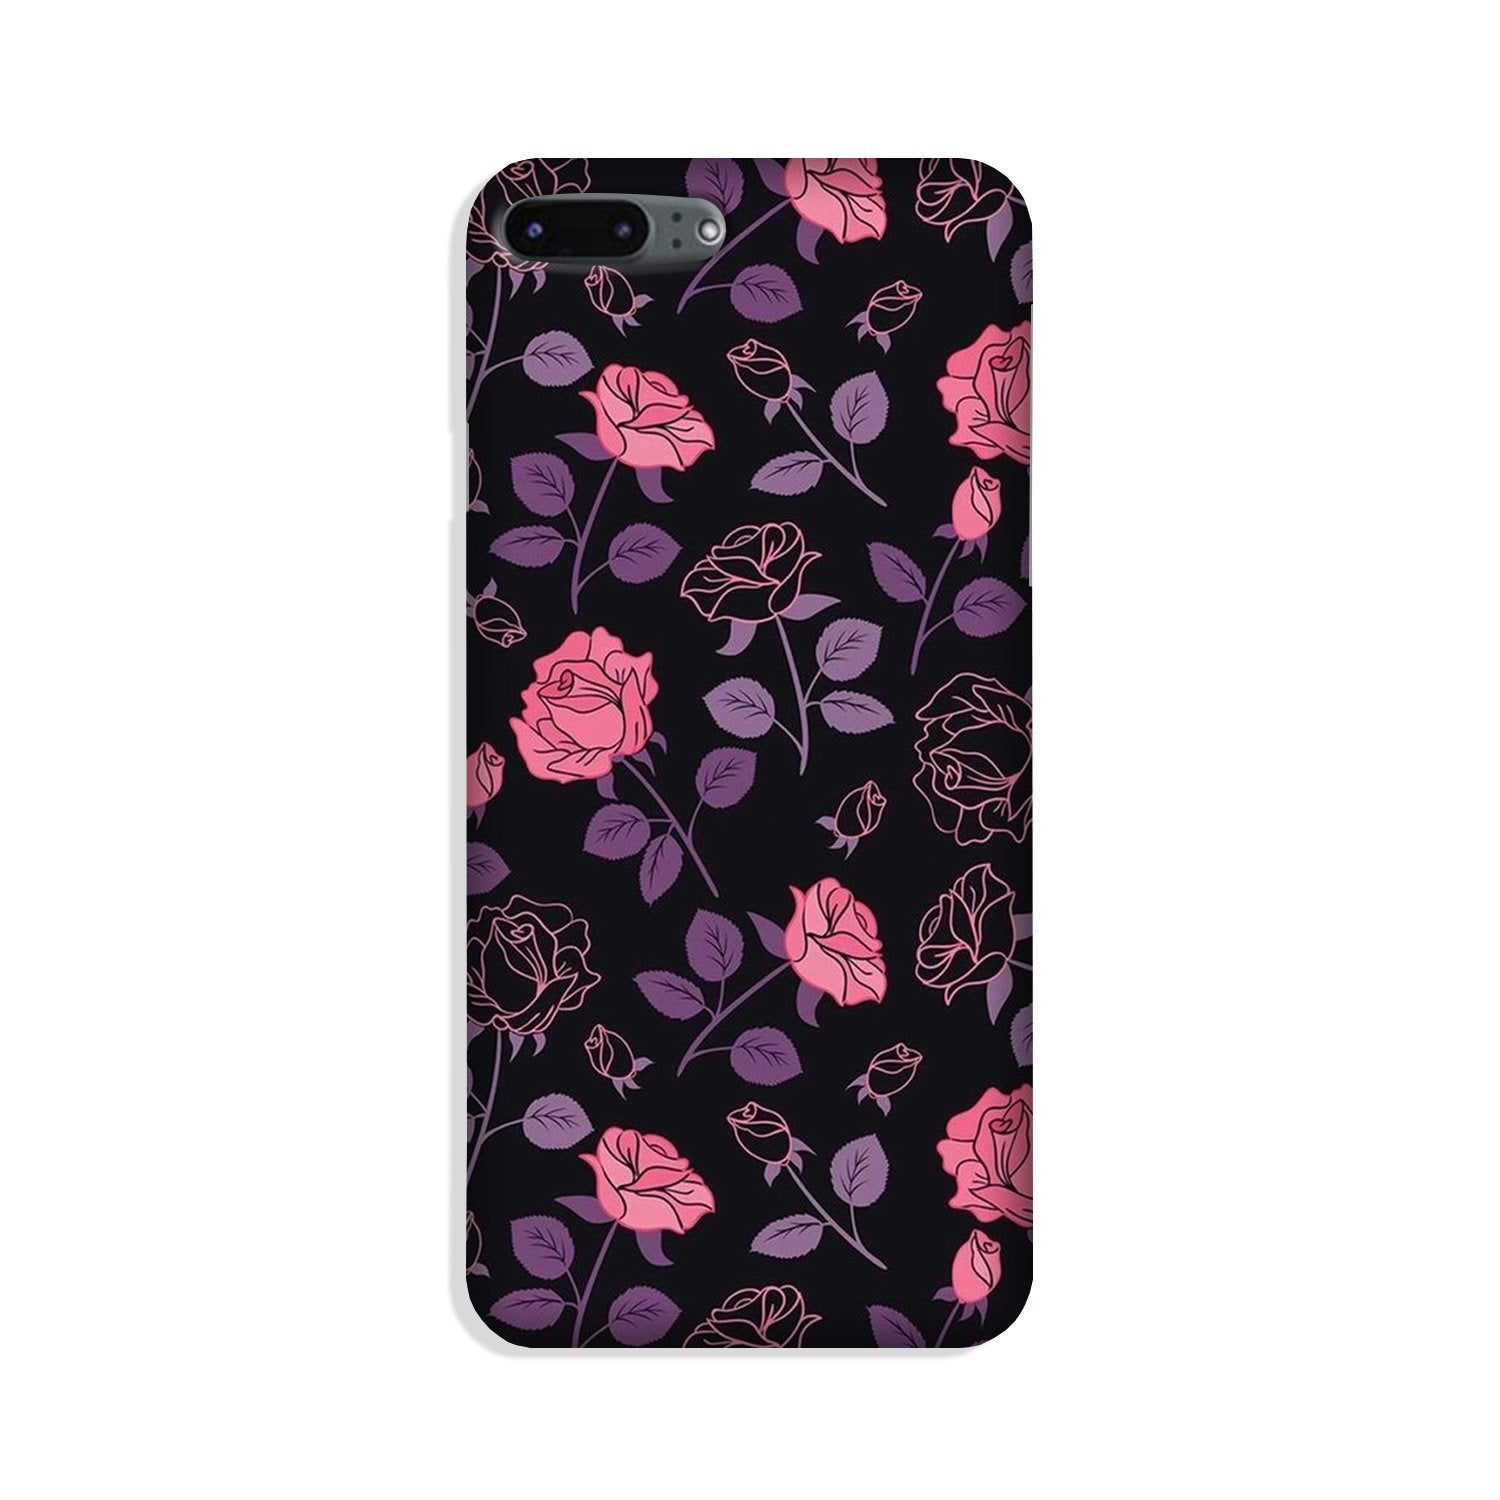 Rose Black Background Case for iPhone 8 Plus